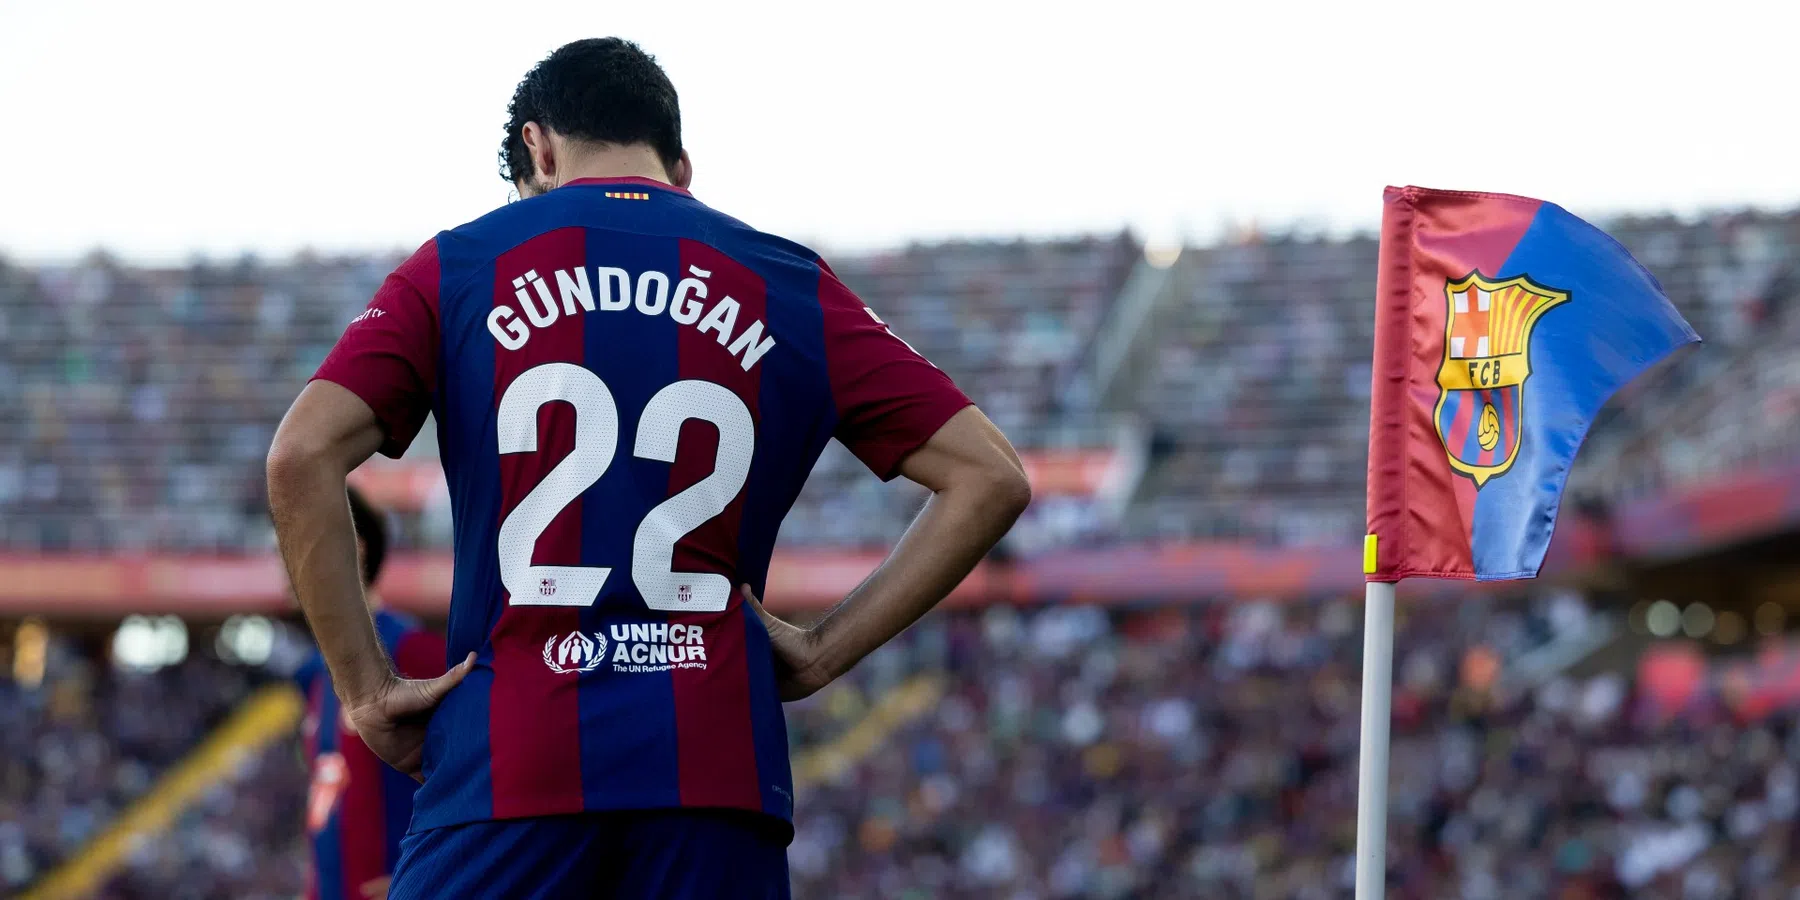 Gündogan hekelt tamme sfeer bij Barcelona na nederlaag tegen Real Madrid